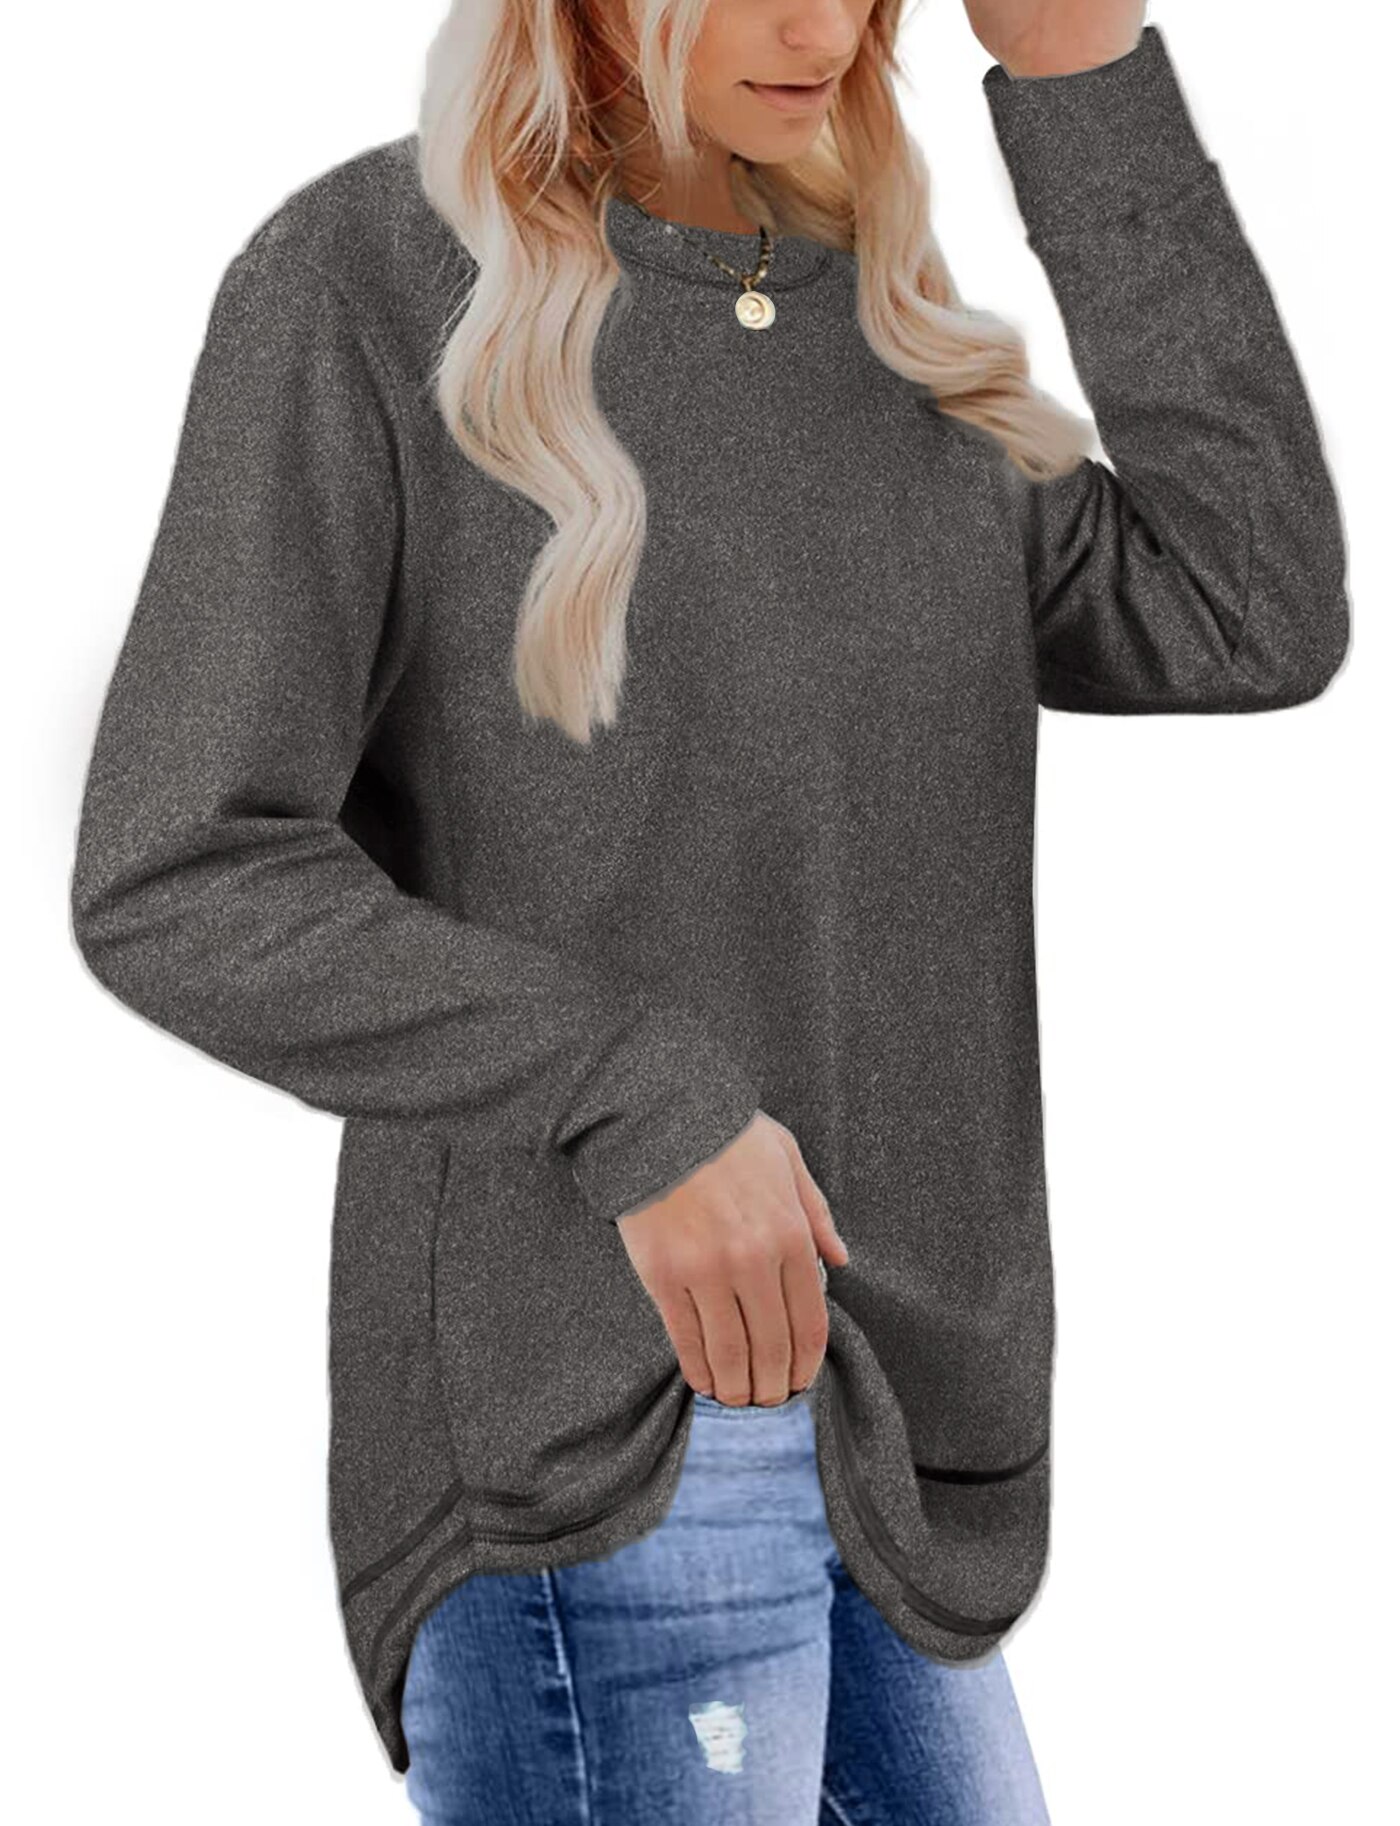 Fantaslook Sweatshirts for Women Crewneck Casual Long Sleeve Shirts ...